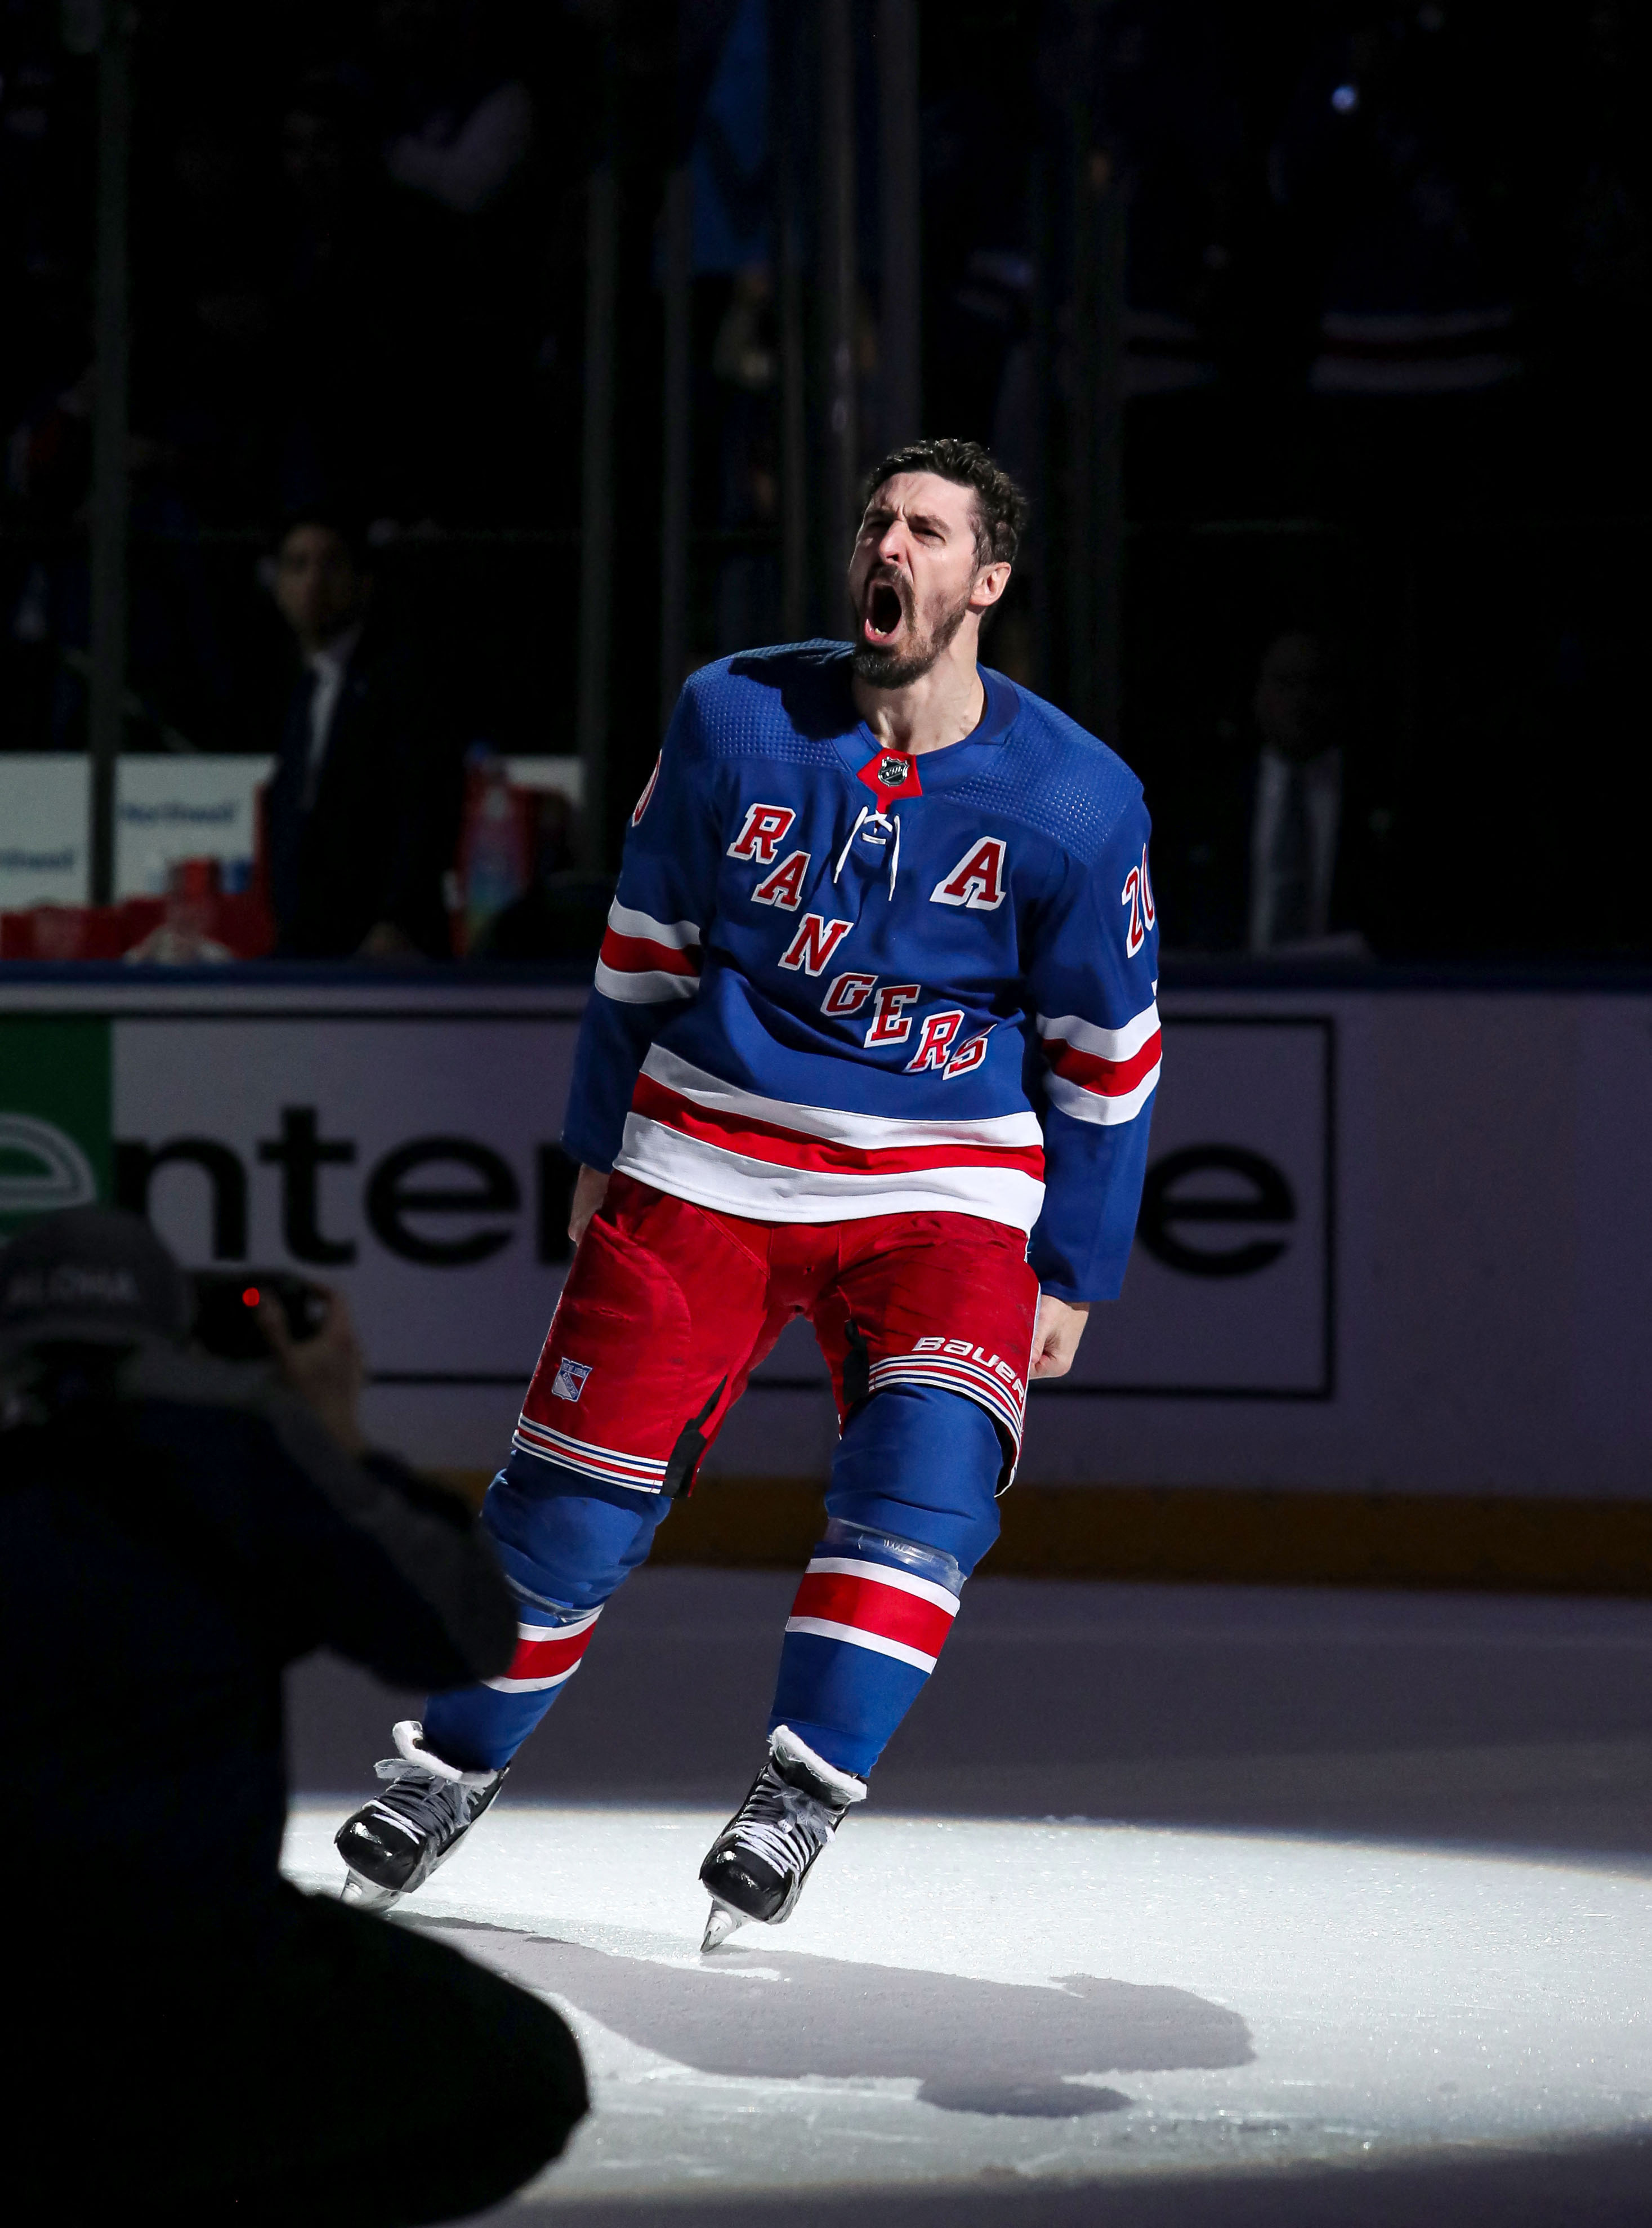 NHL playoffs: New Jersey Devils down New York Rangers, advance to semis 